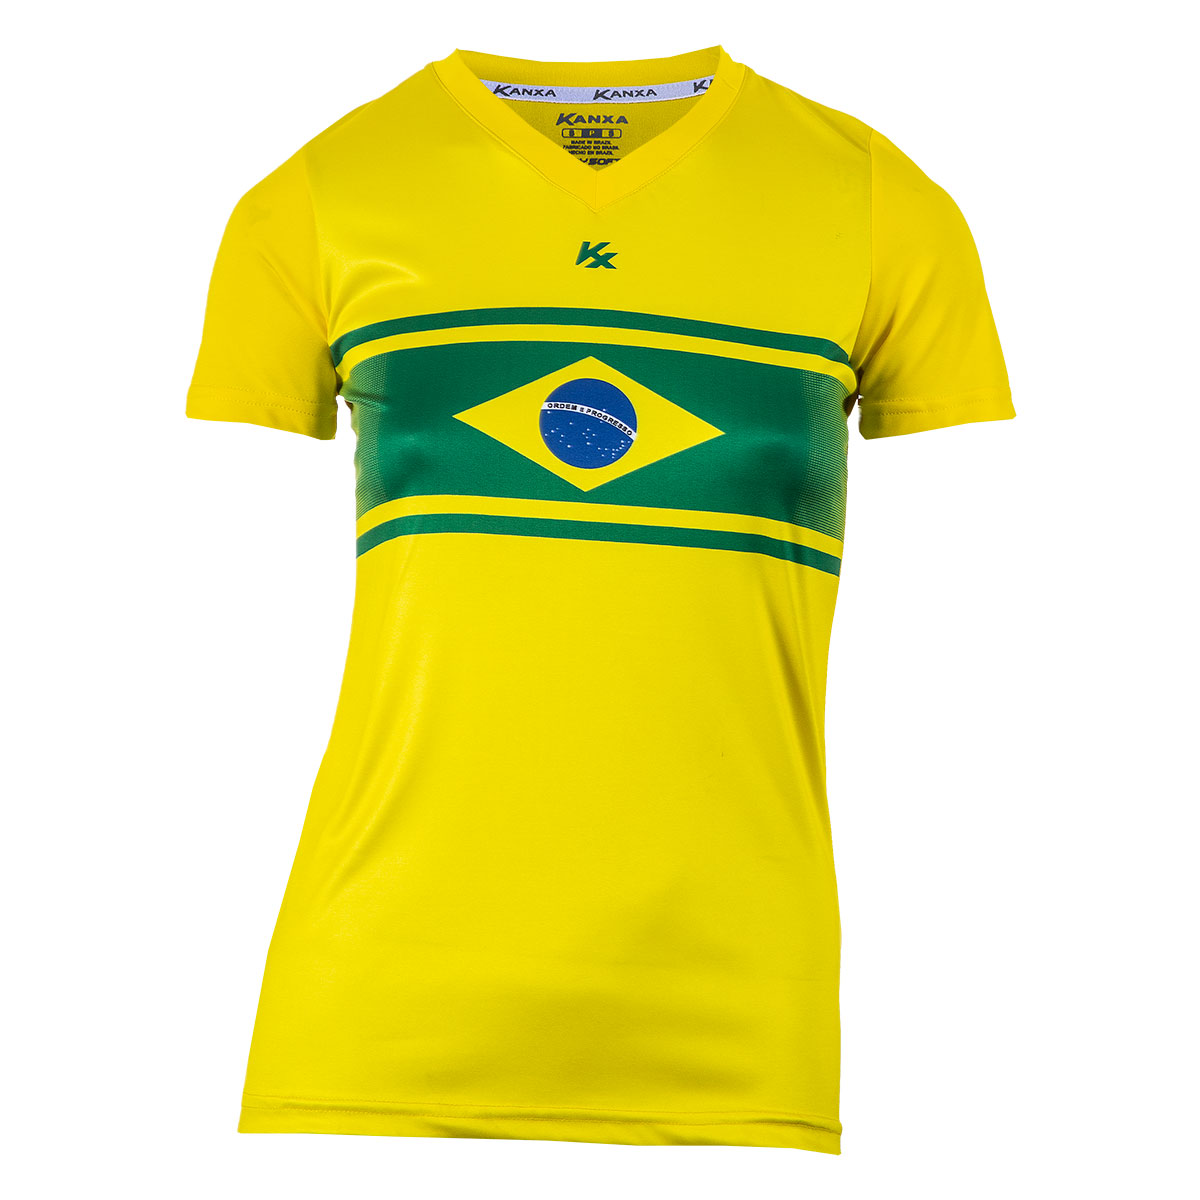 Camiseta Fem. Kanxa Gol Braza Casual - Amarelo/Verde